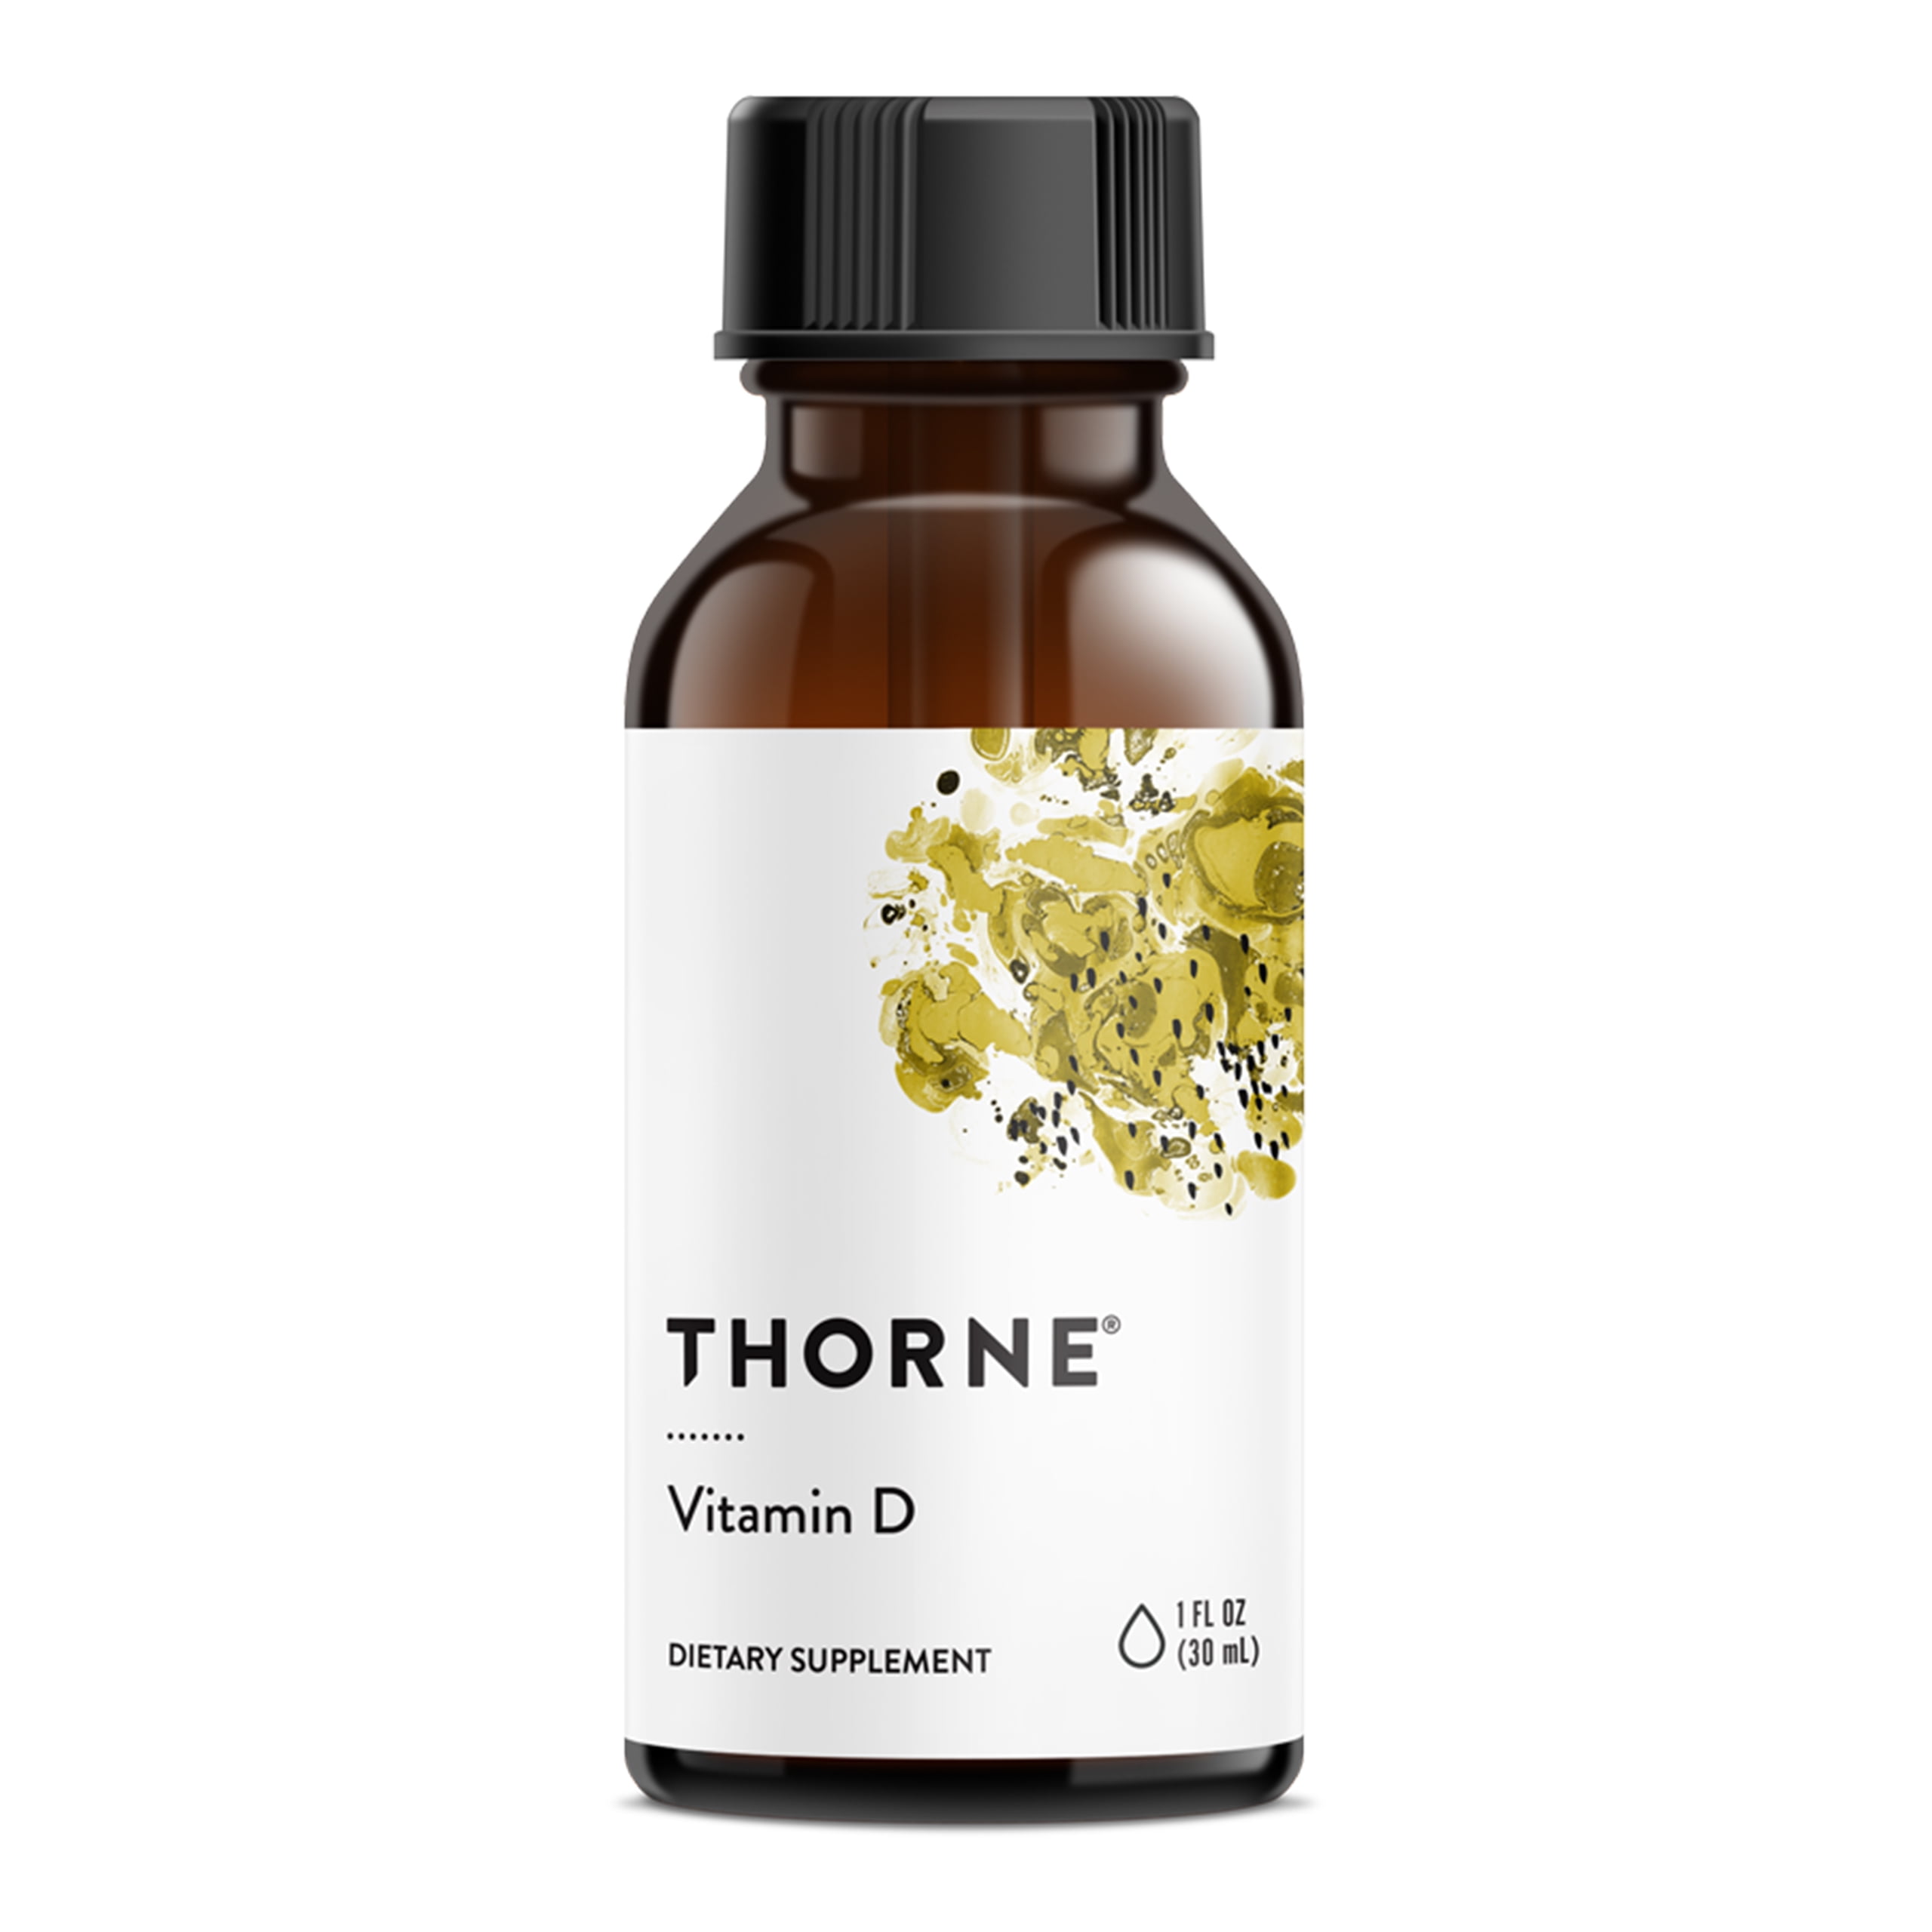 Thorne Vitamin D Liquid (Metered Dispenser), Supplement for Healthy Bones and Muscles, 1 Fl Oz